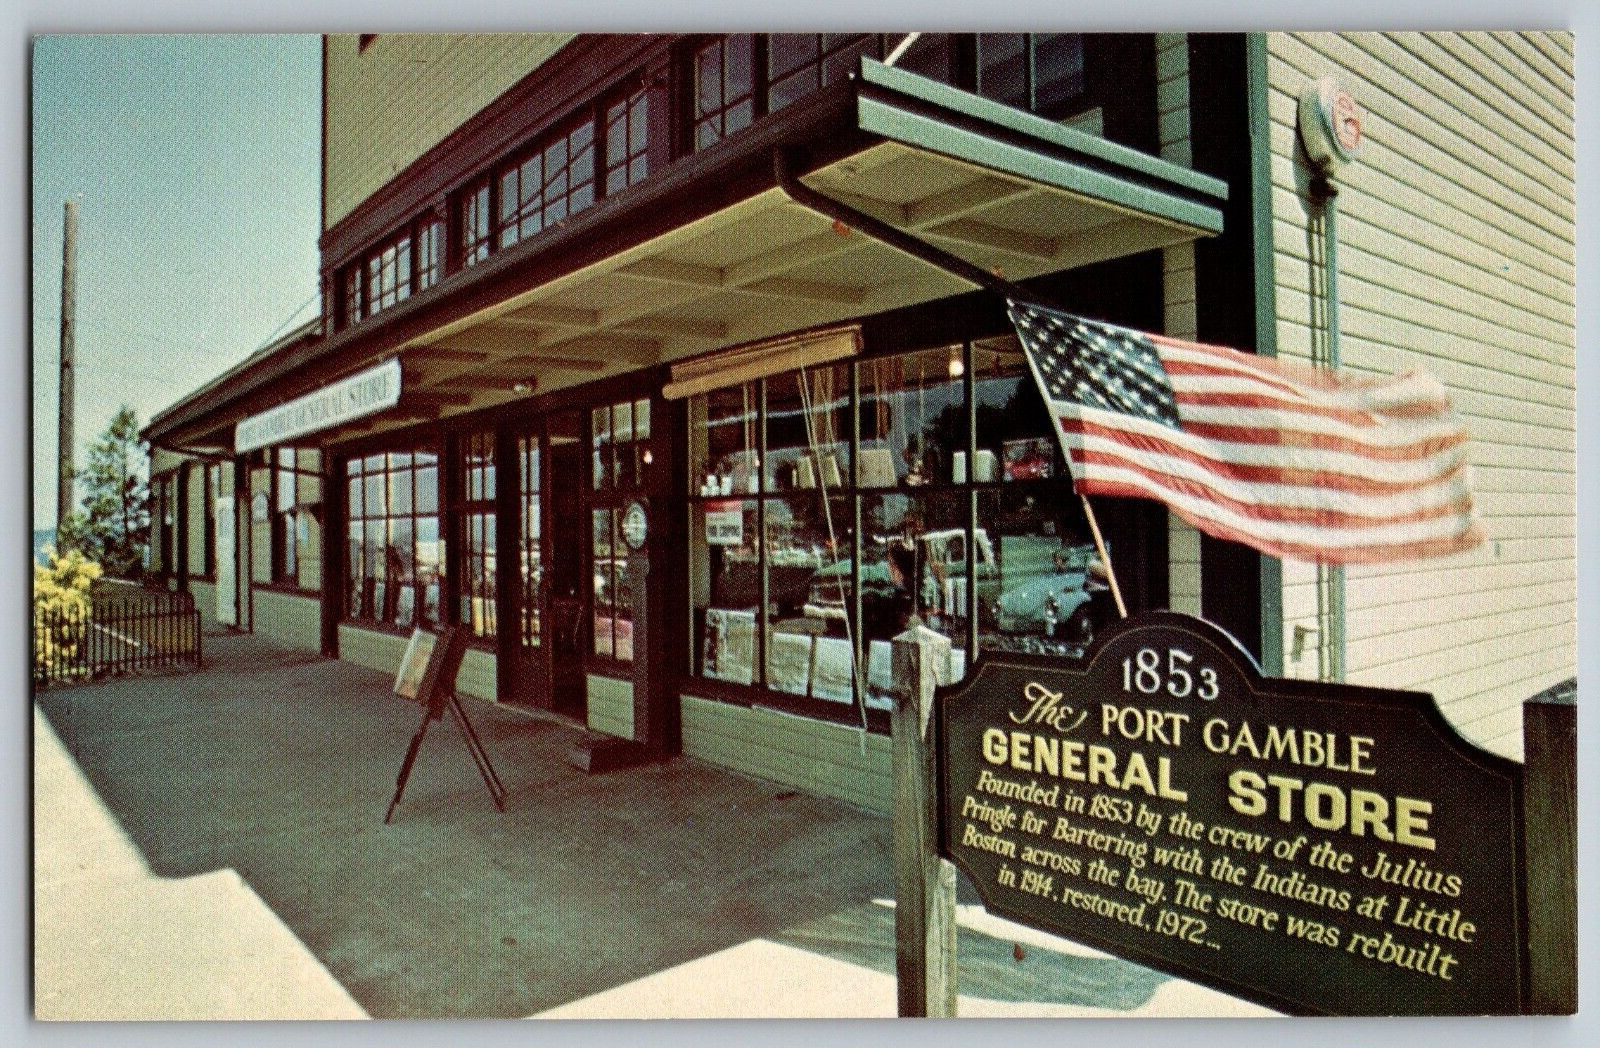 Portland, Oregon OR - The Port Gamble General Store in 1853 - Vintage Postcard